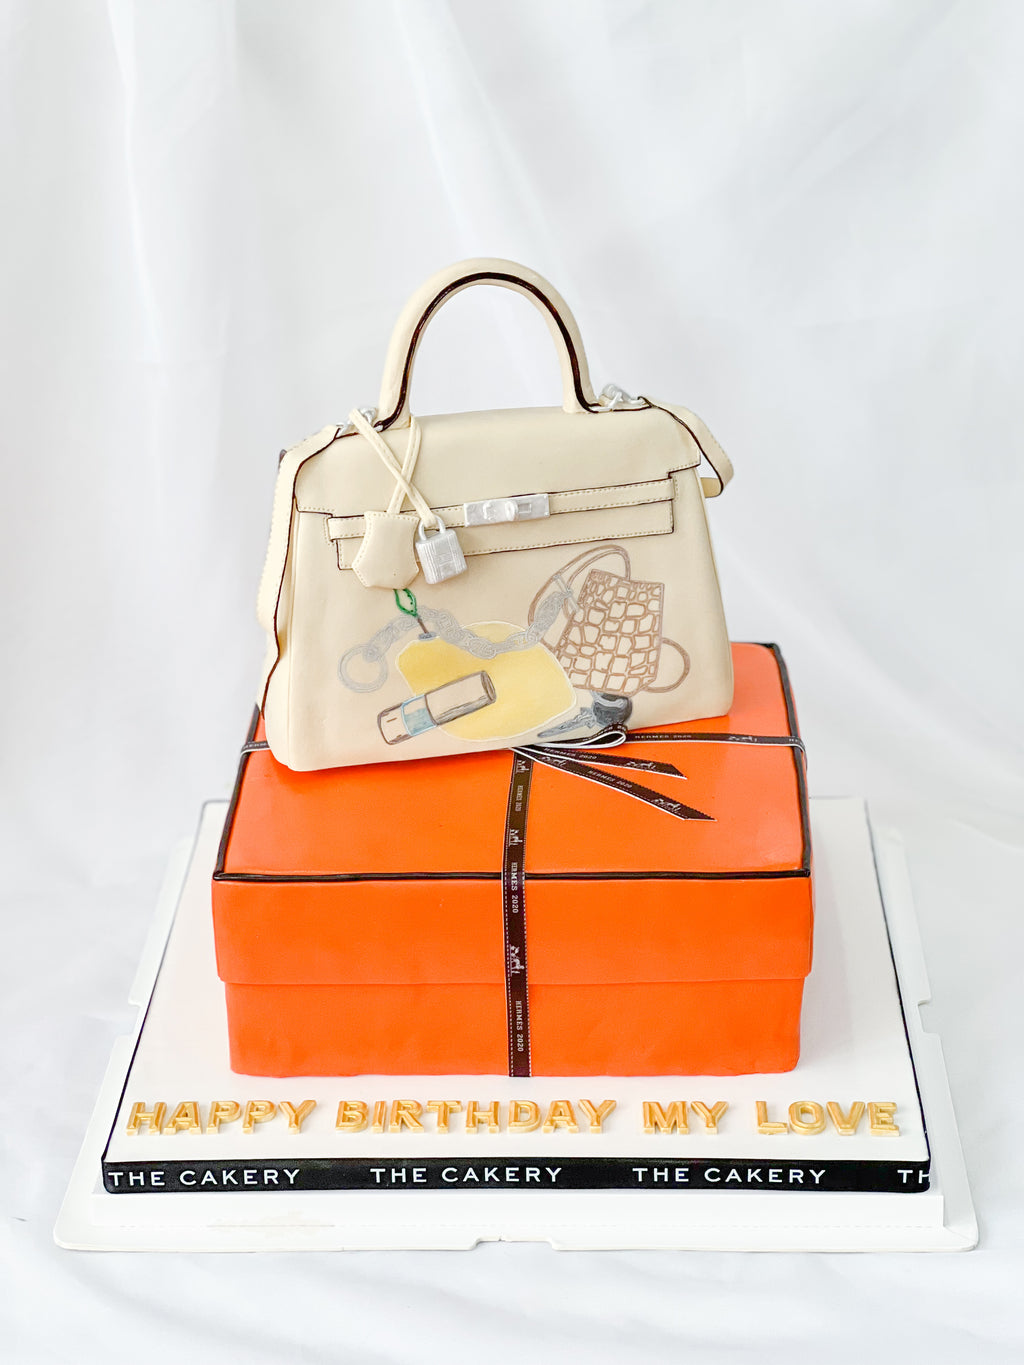 Louis Vuitton Hand Bag Cake 3 - Montilio's Bakery